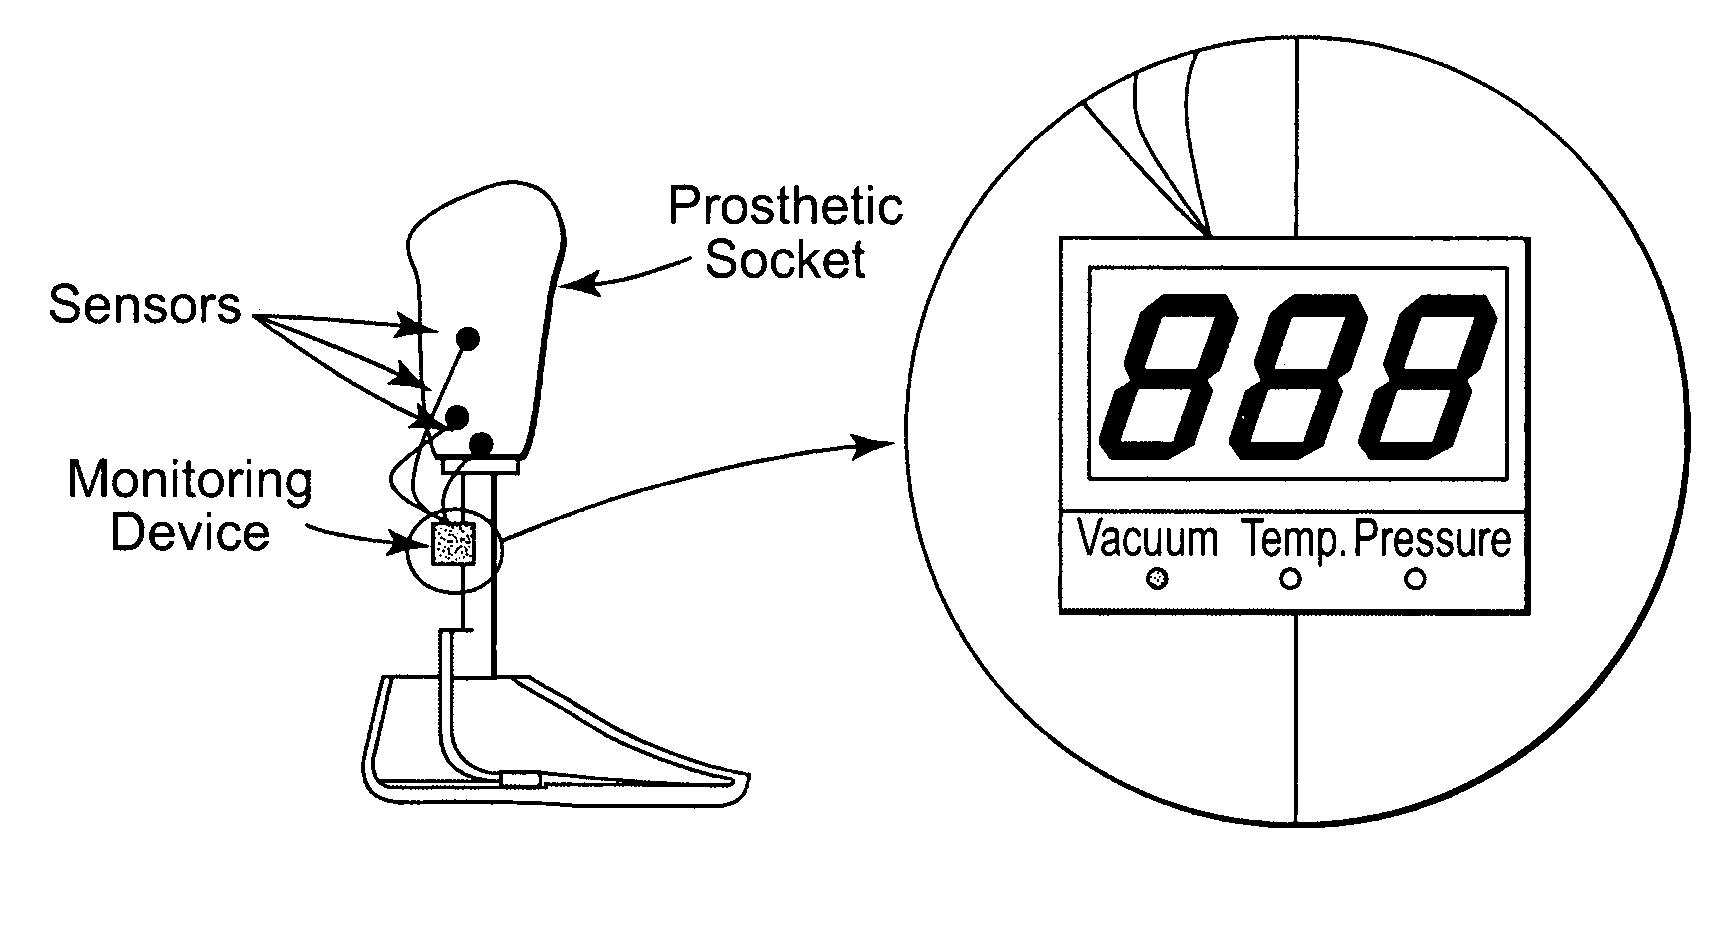 Pressure/temperature monitoring device for prosthetics